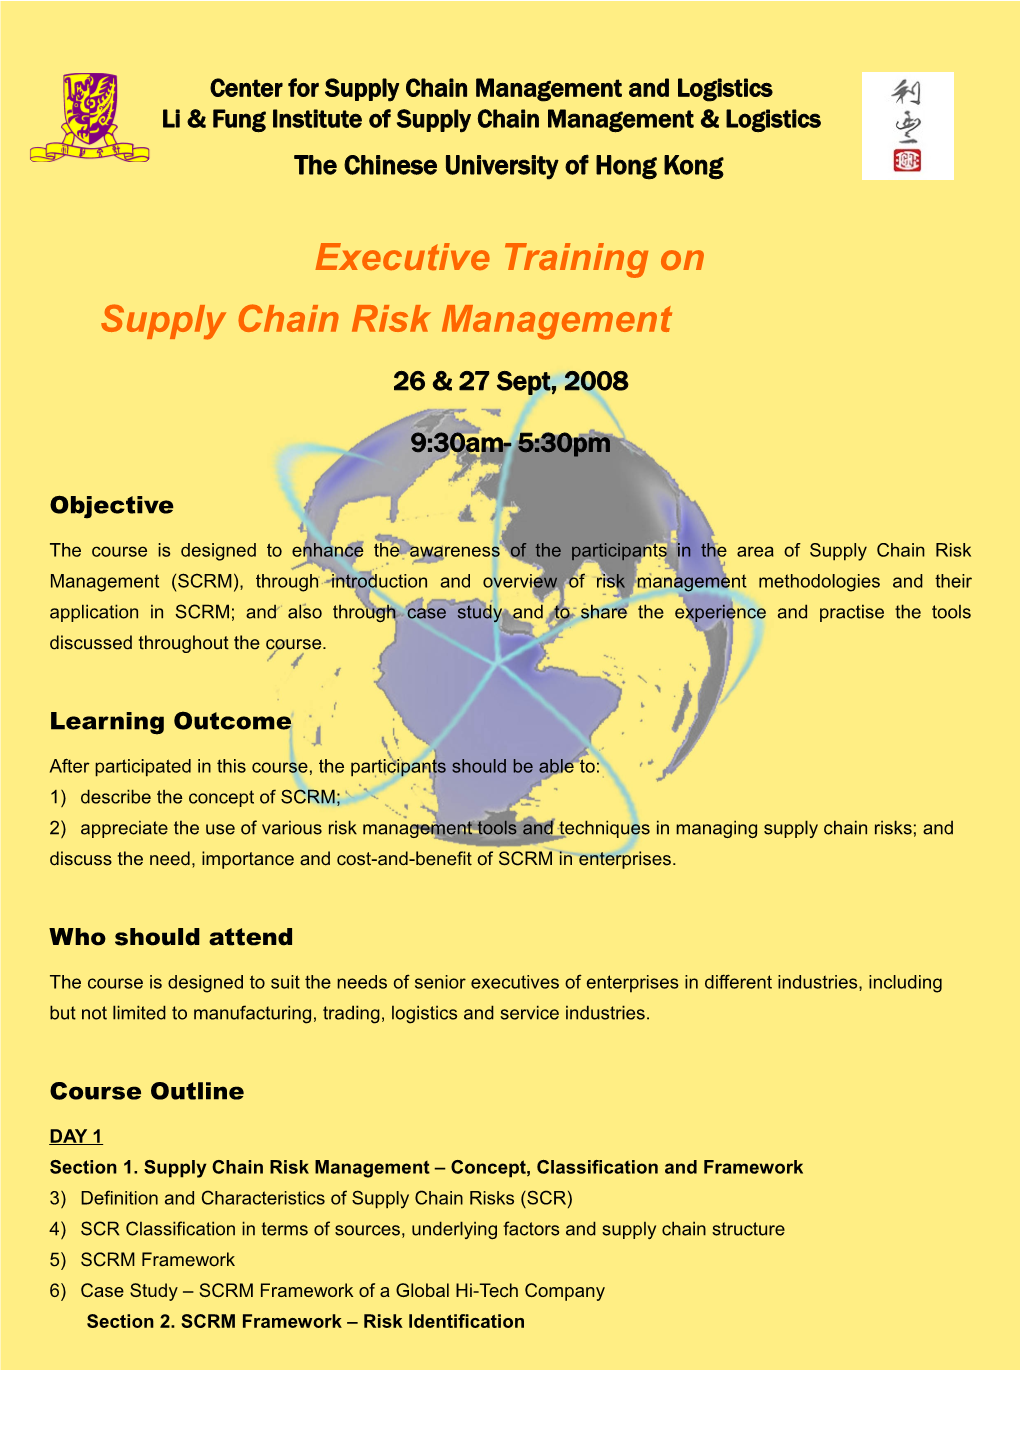 Li & Fung Institute of Supply Chain Management & Logistics